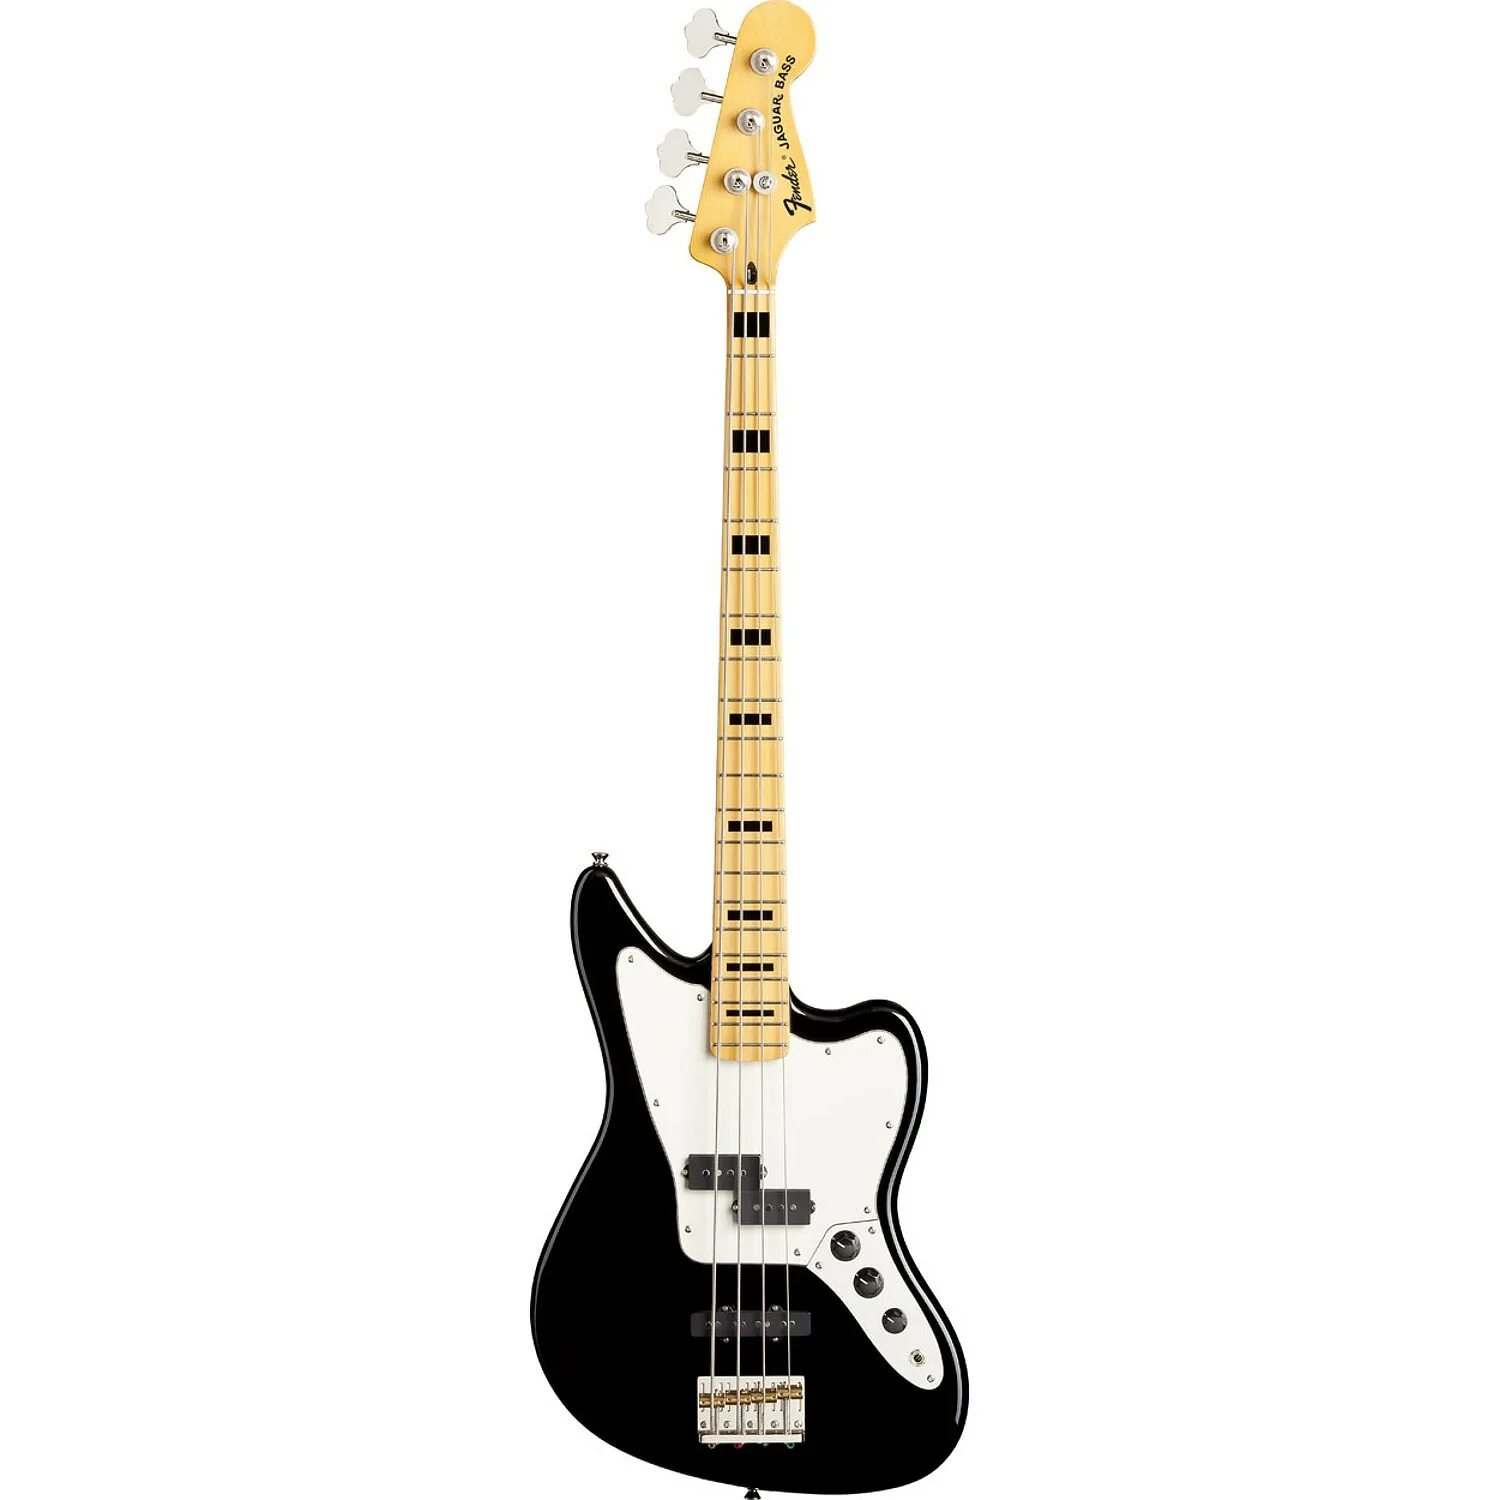 Bass edition. Электрогитара Fender Modern Player Jaguar. Бас гитара Charvel. Фендер Ягуар бас. Бас гитара Fender Musicman.